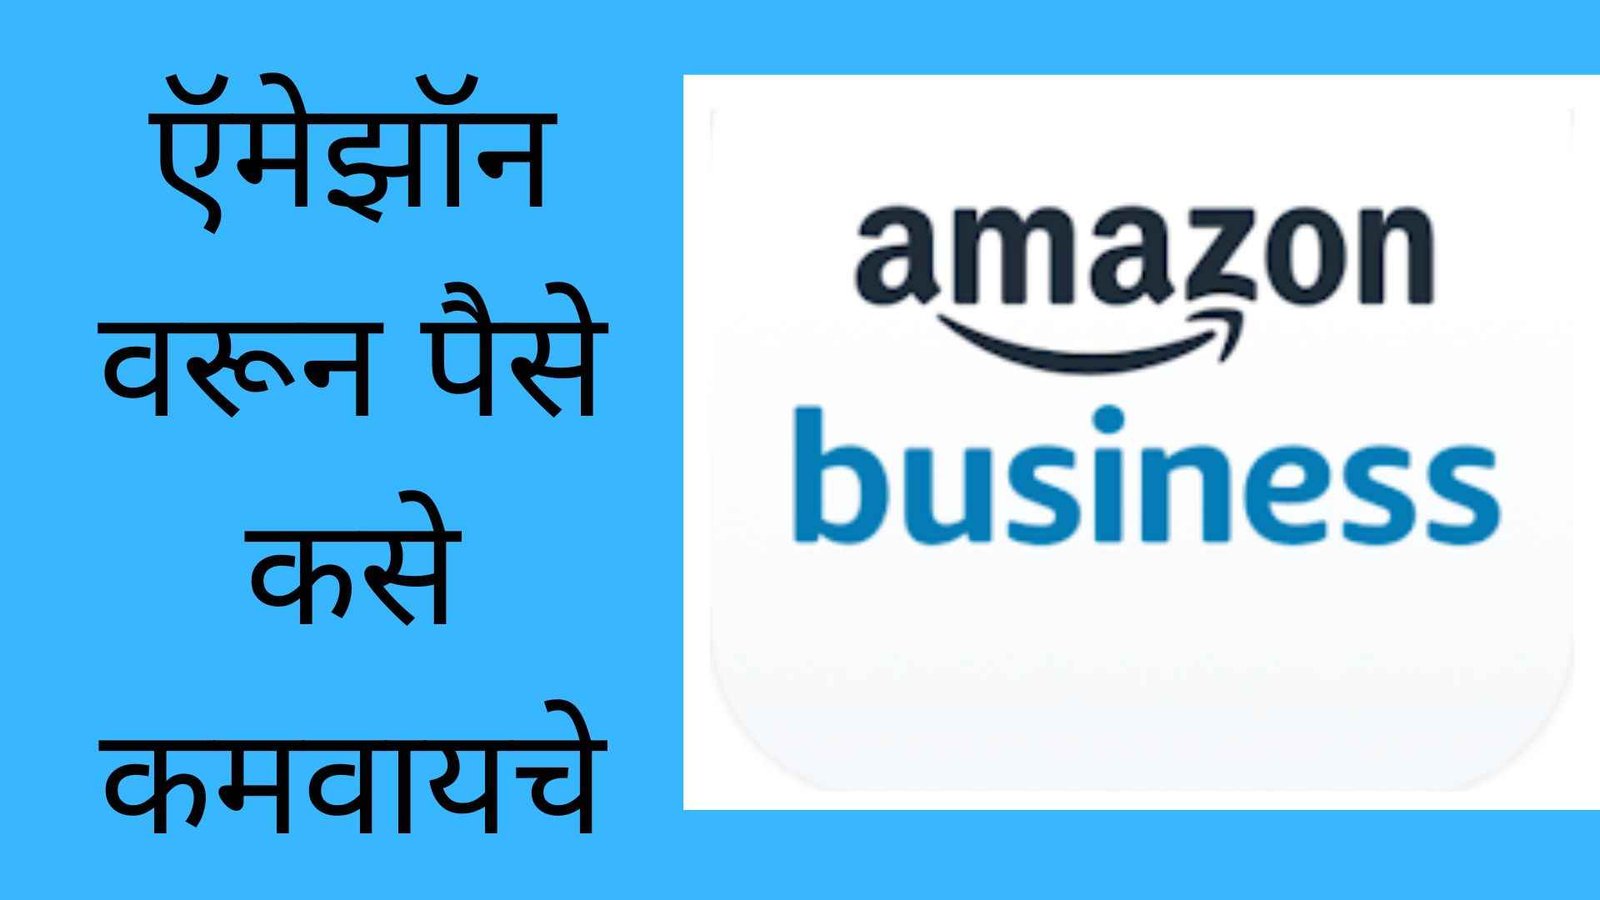 ऍमेझॉन वरून पैसे कसे कमवायचे, संपूर्ण माहिती | How To Earn money From Amazon In Marathi